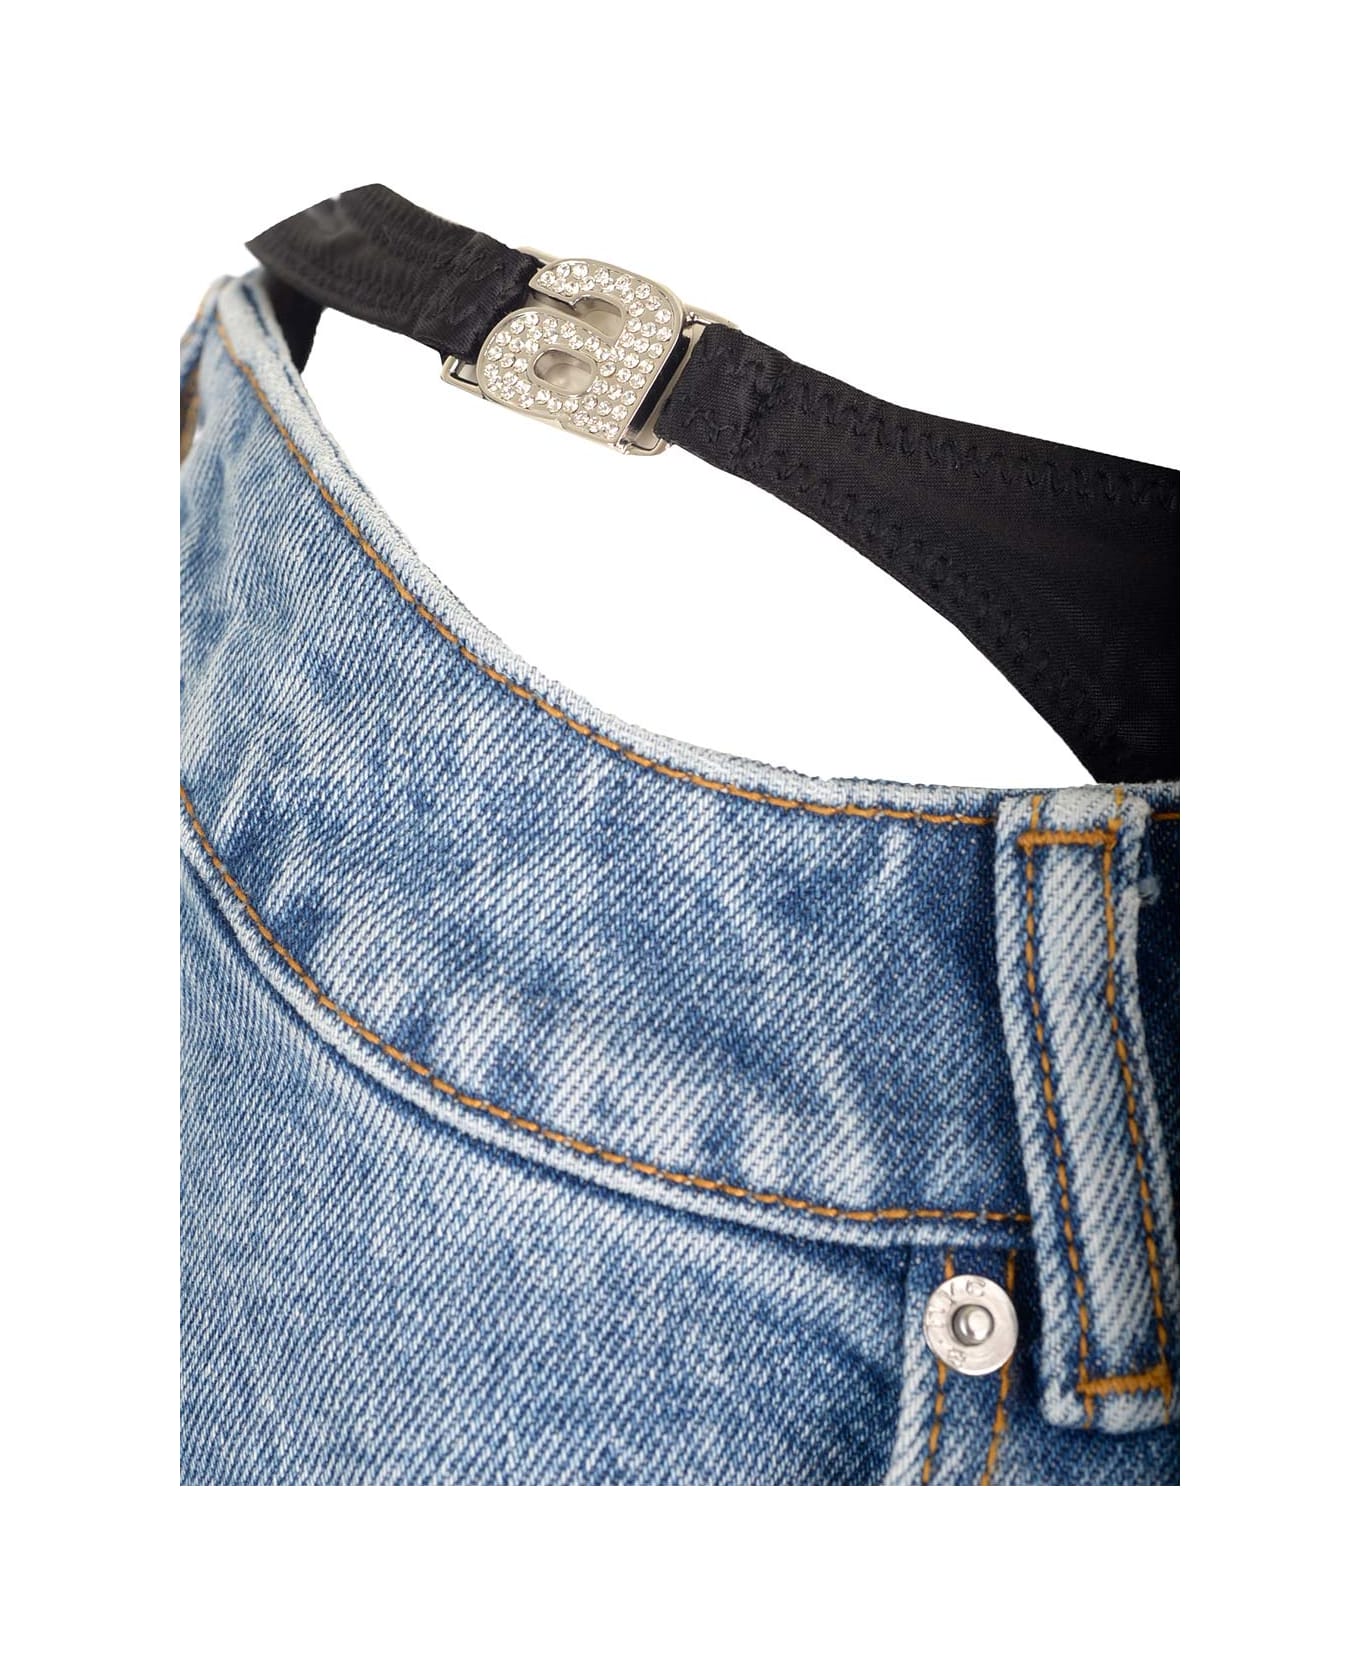 Alexander Wang Visible Underwear Jeans - BLUE デニム